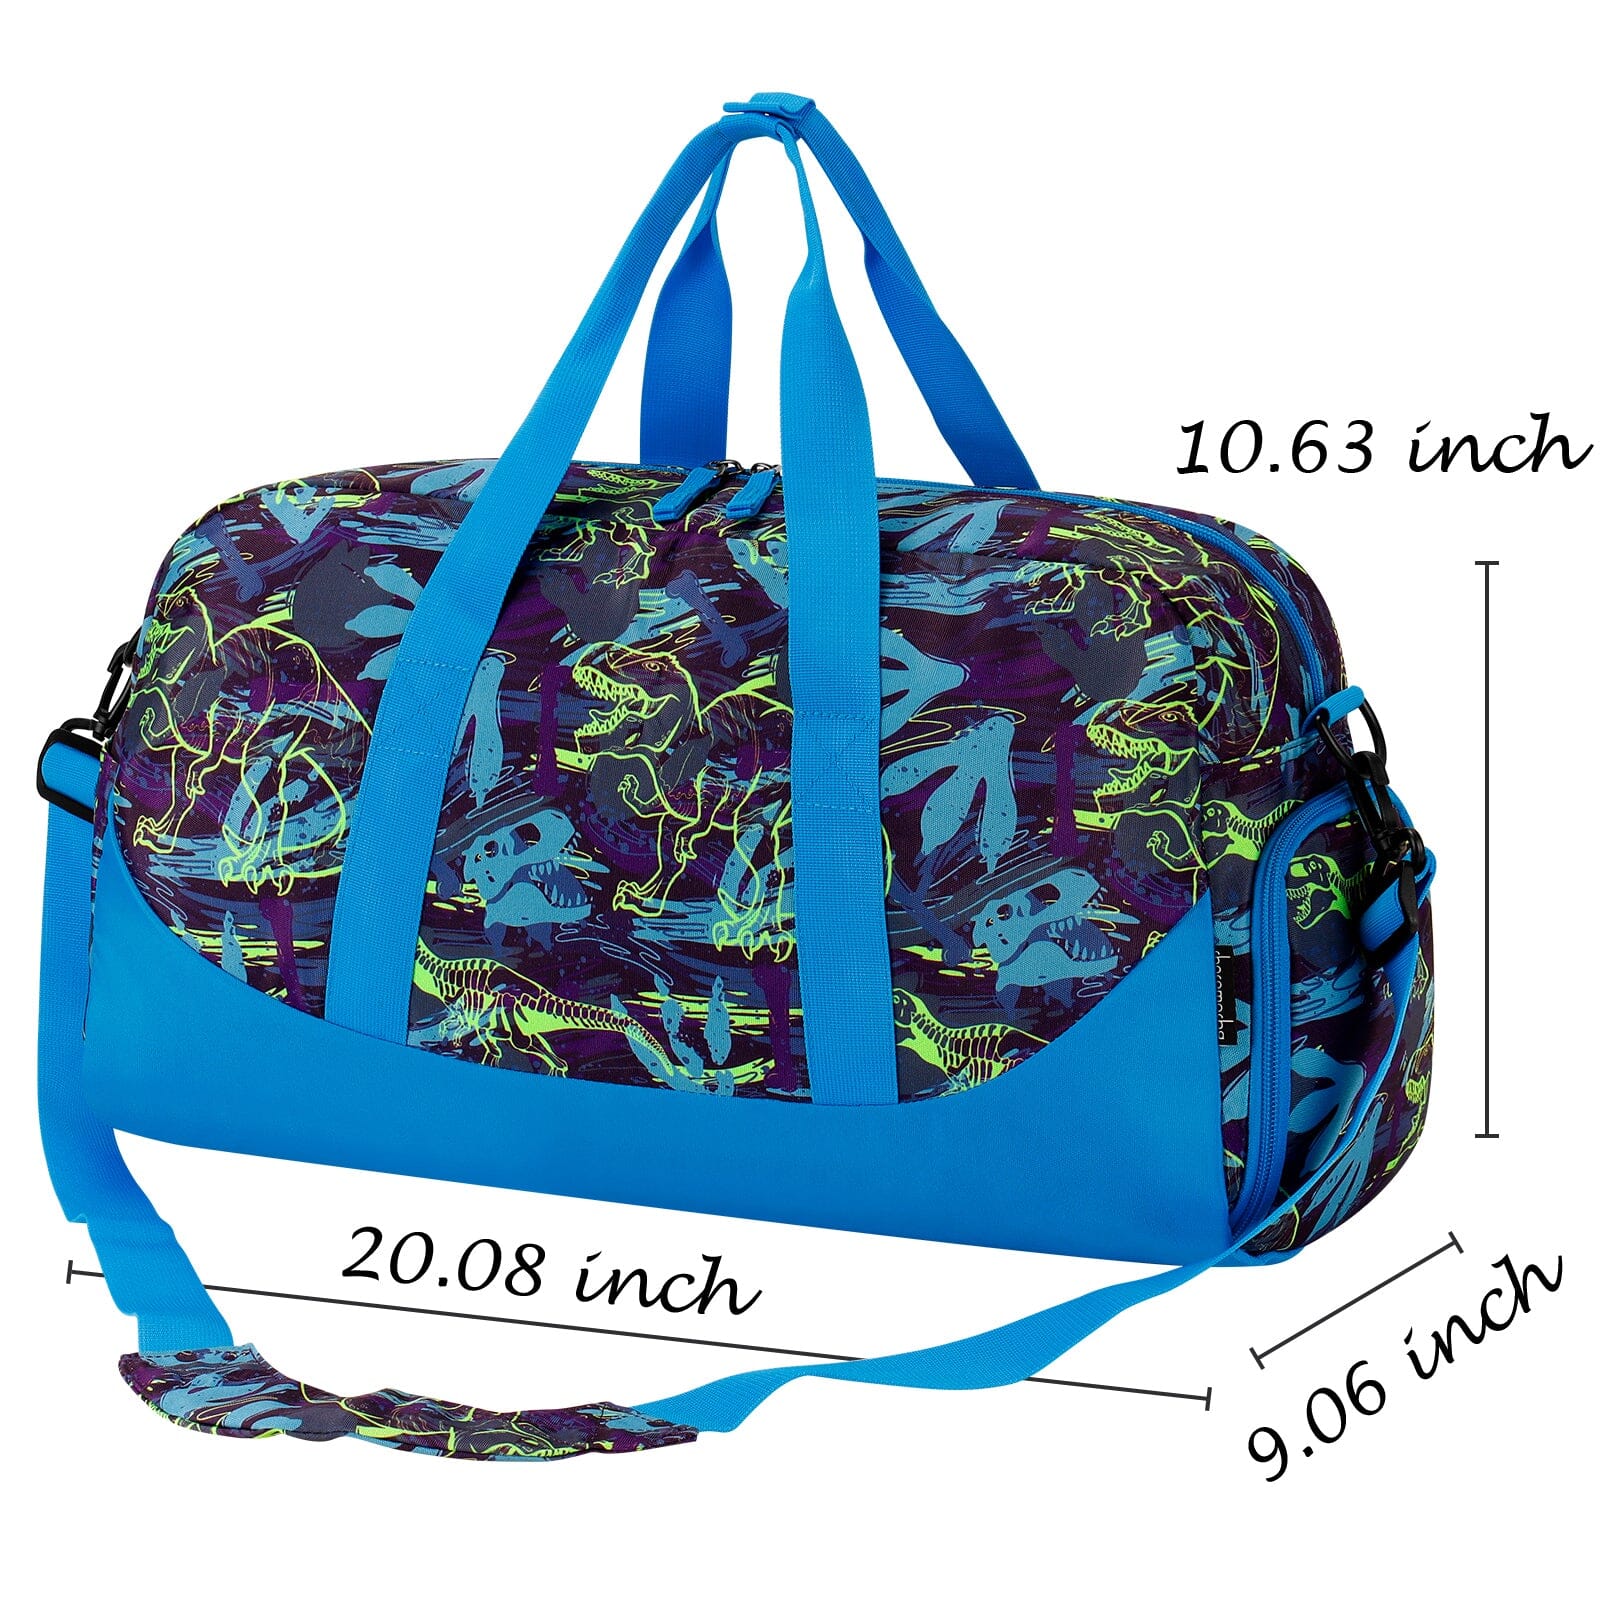 Copy of Choco Mocha Kids Dinosaur Duffle Bag for Boys, Blue Weekend Bag for Kids 20.08*9.06*10.63 inches chocomochakids 